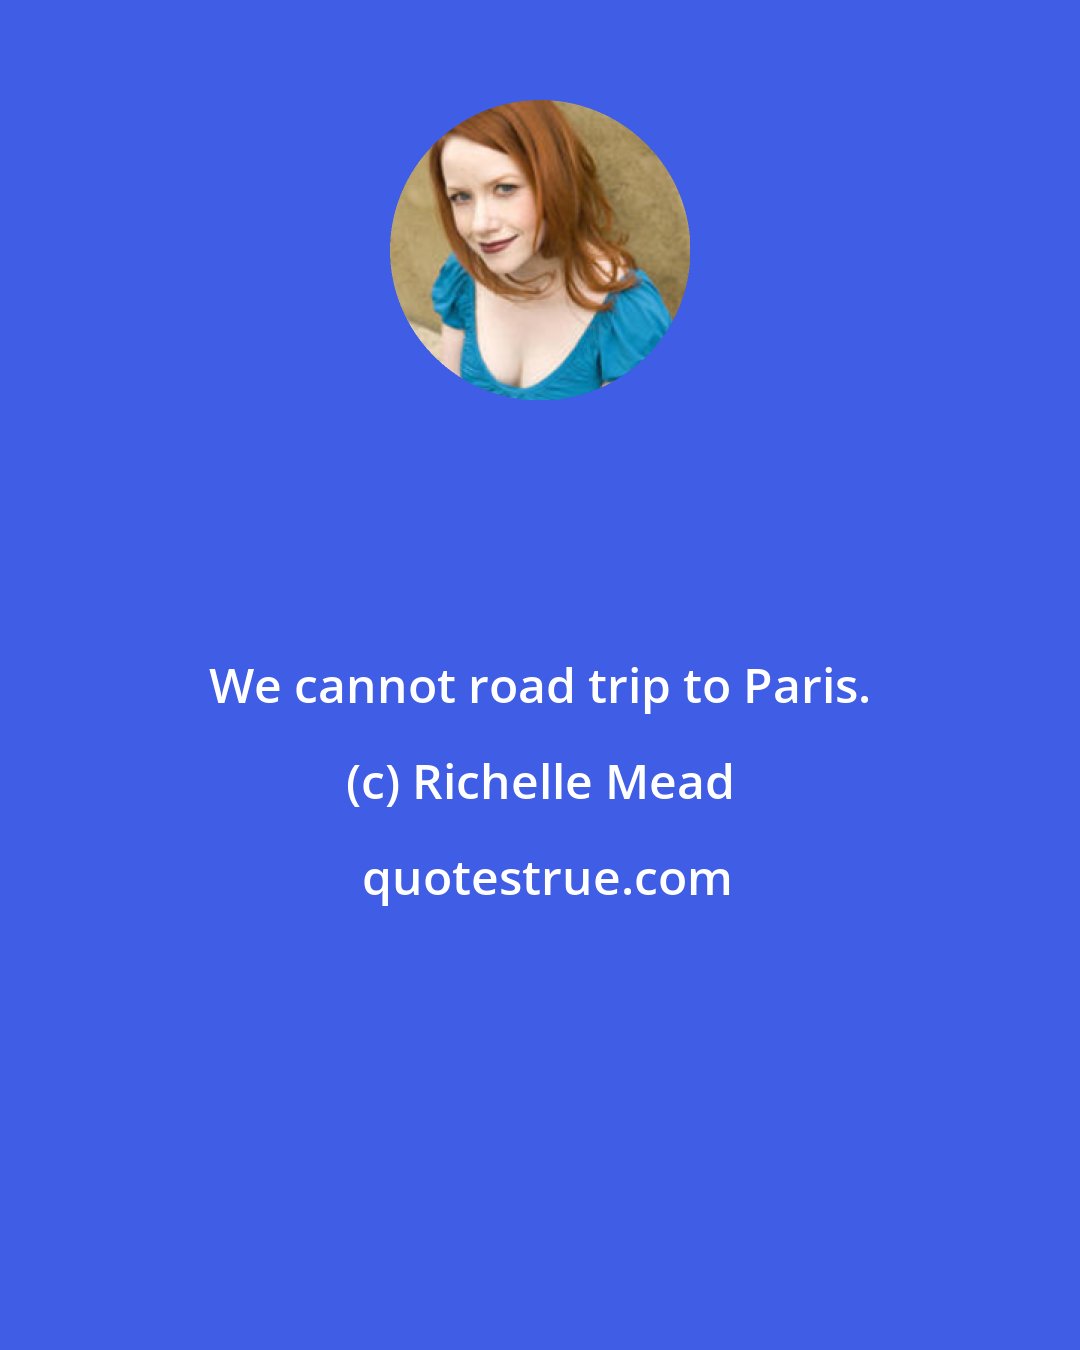 Richelle Mead: We cannot road trip to Paris.